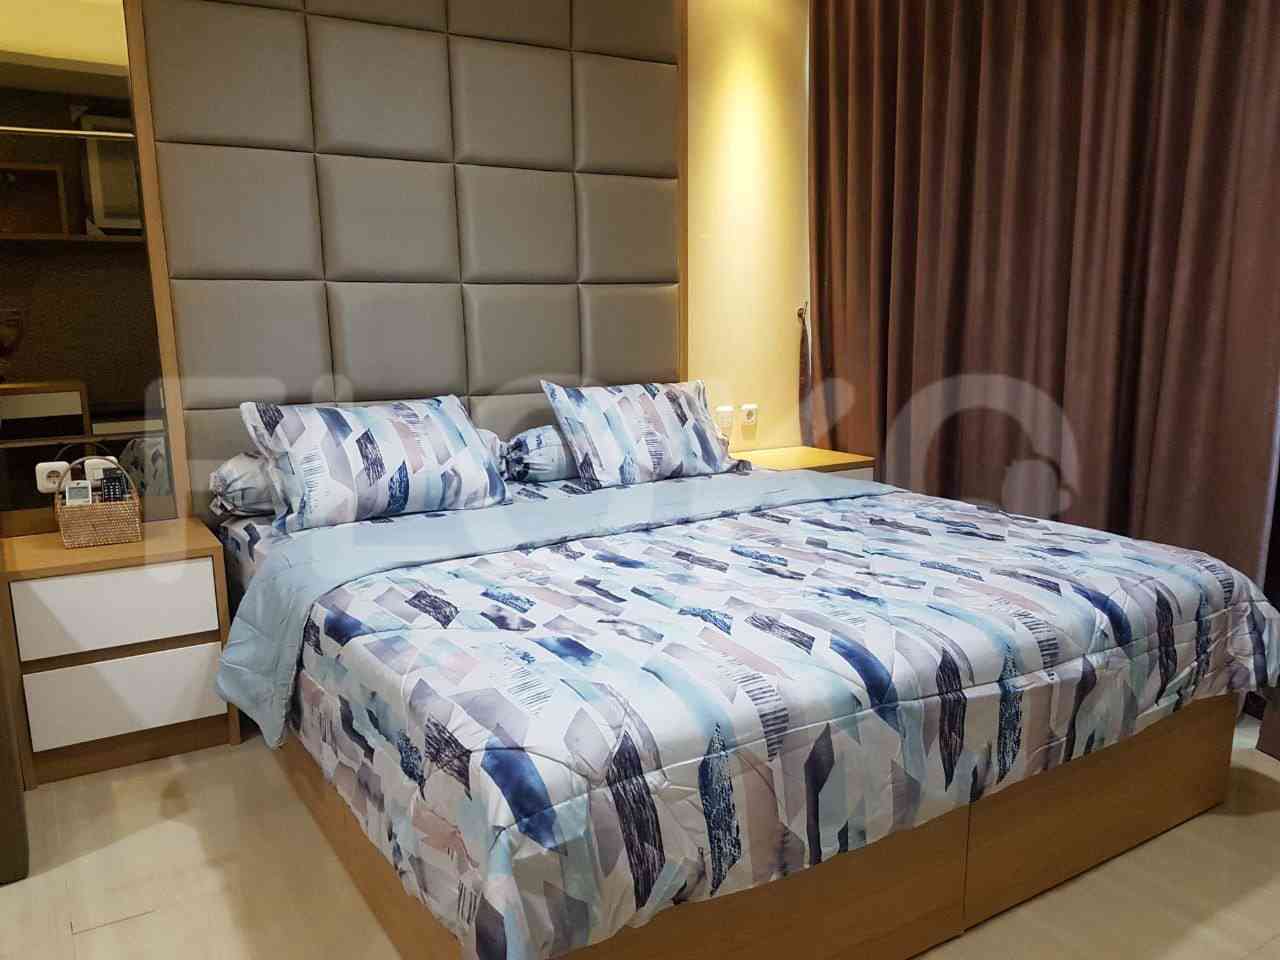 1 Bedroom on 19th Floor for Rent in Kemang Village Residence - fkeb62 2